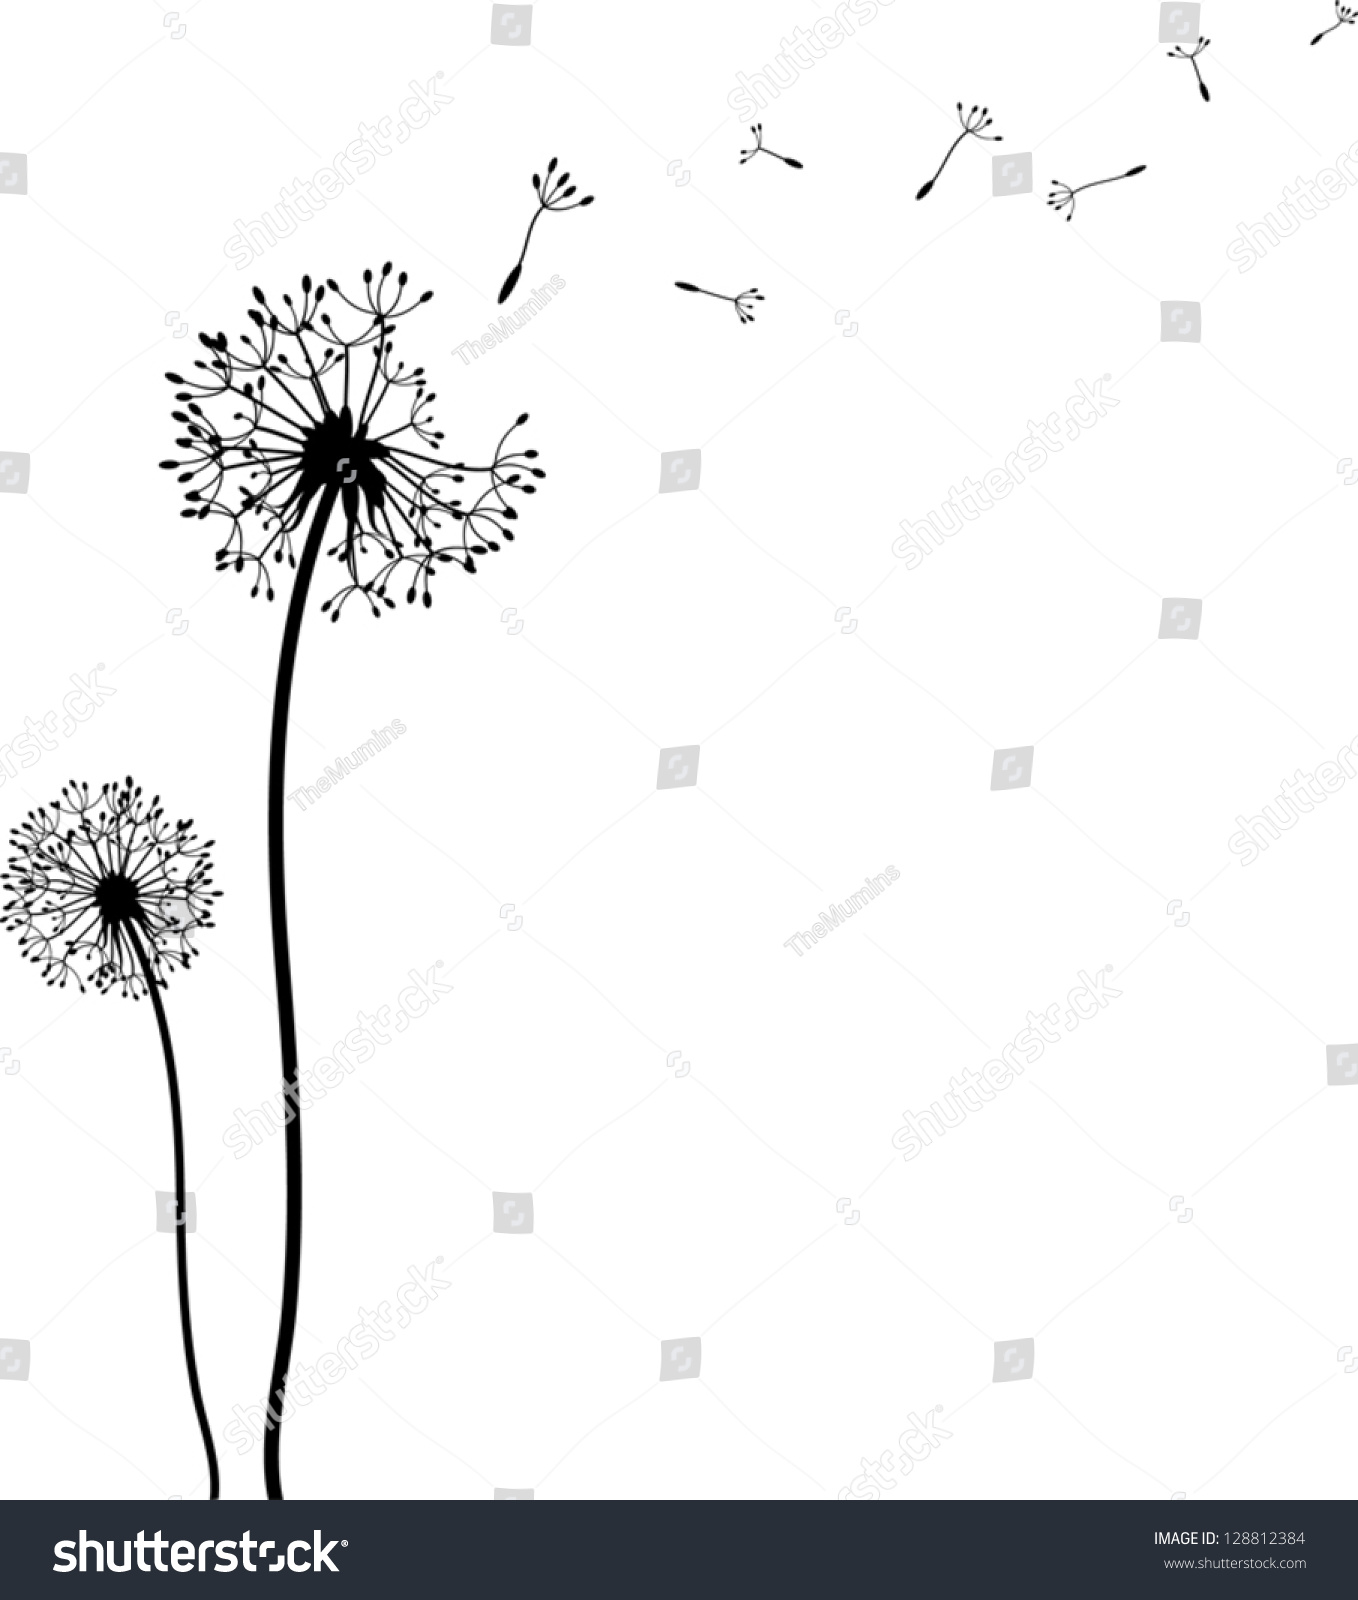 Dandelion clipart dandelion clock. Black and white drawing